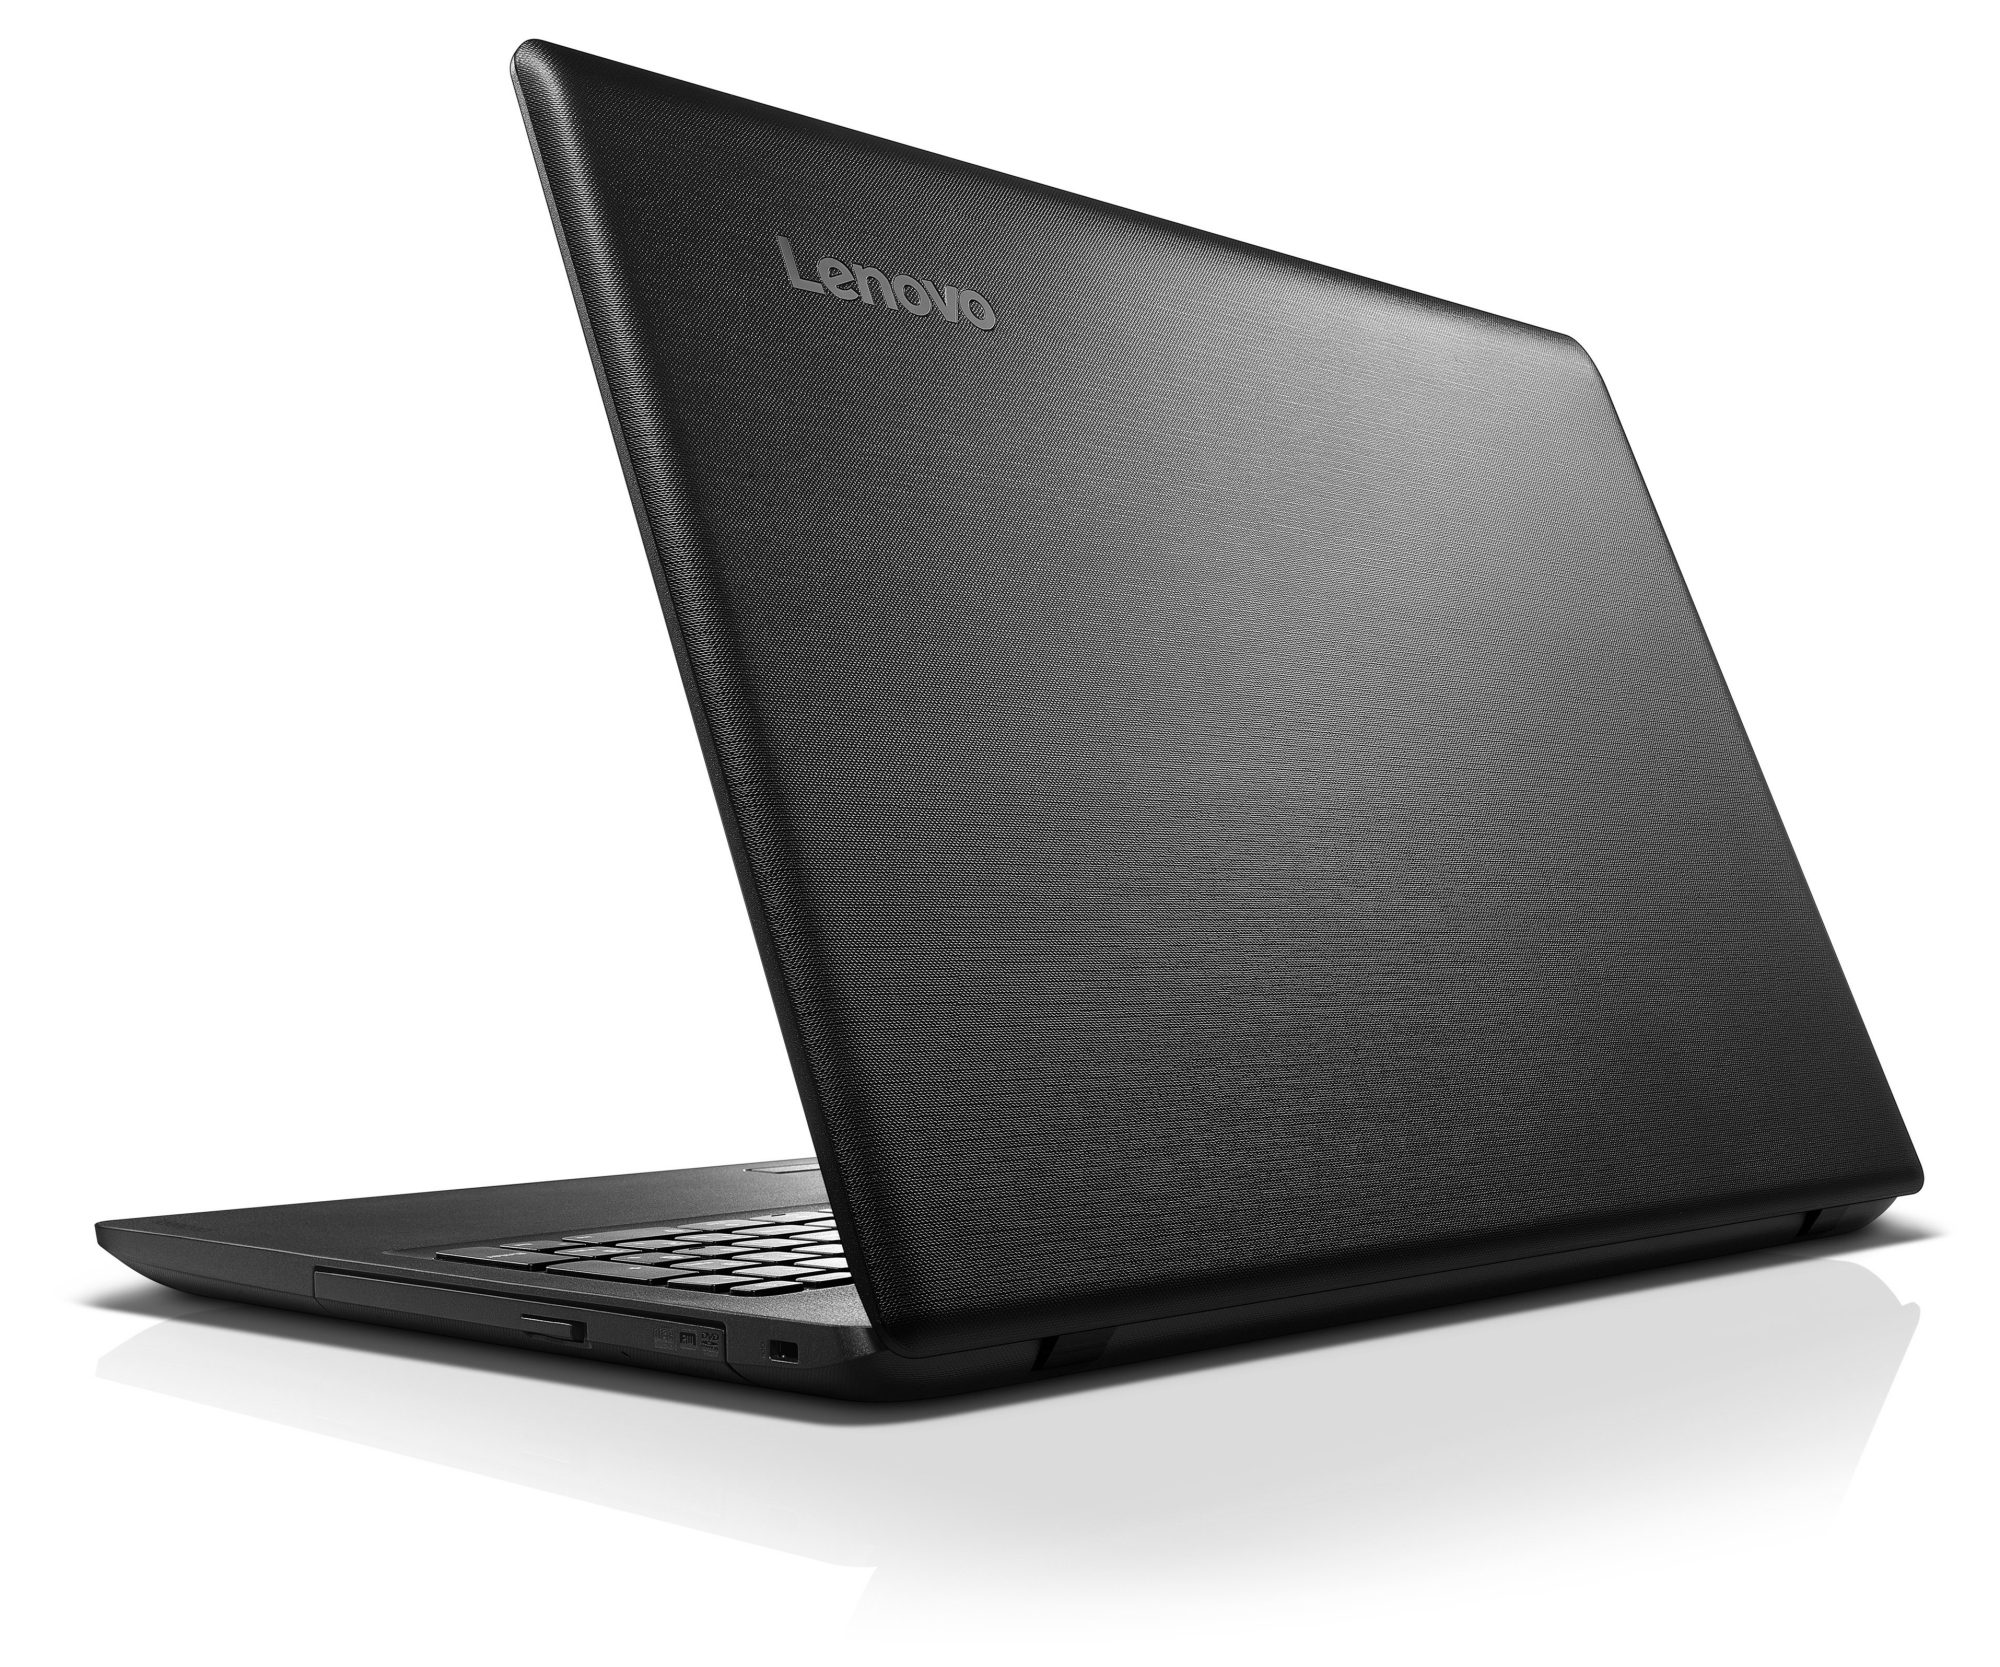 Lenovo g50 память. Lenovo IDEAPAD Flex 2. Lenovo Flex 2-14. Ноутбук Lenovo IDEAPAD g5045. Lenovo IDEAPAD g50-45.